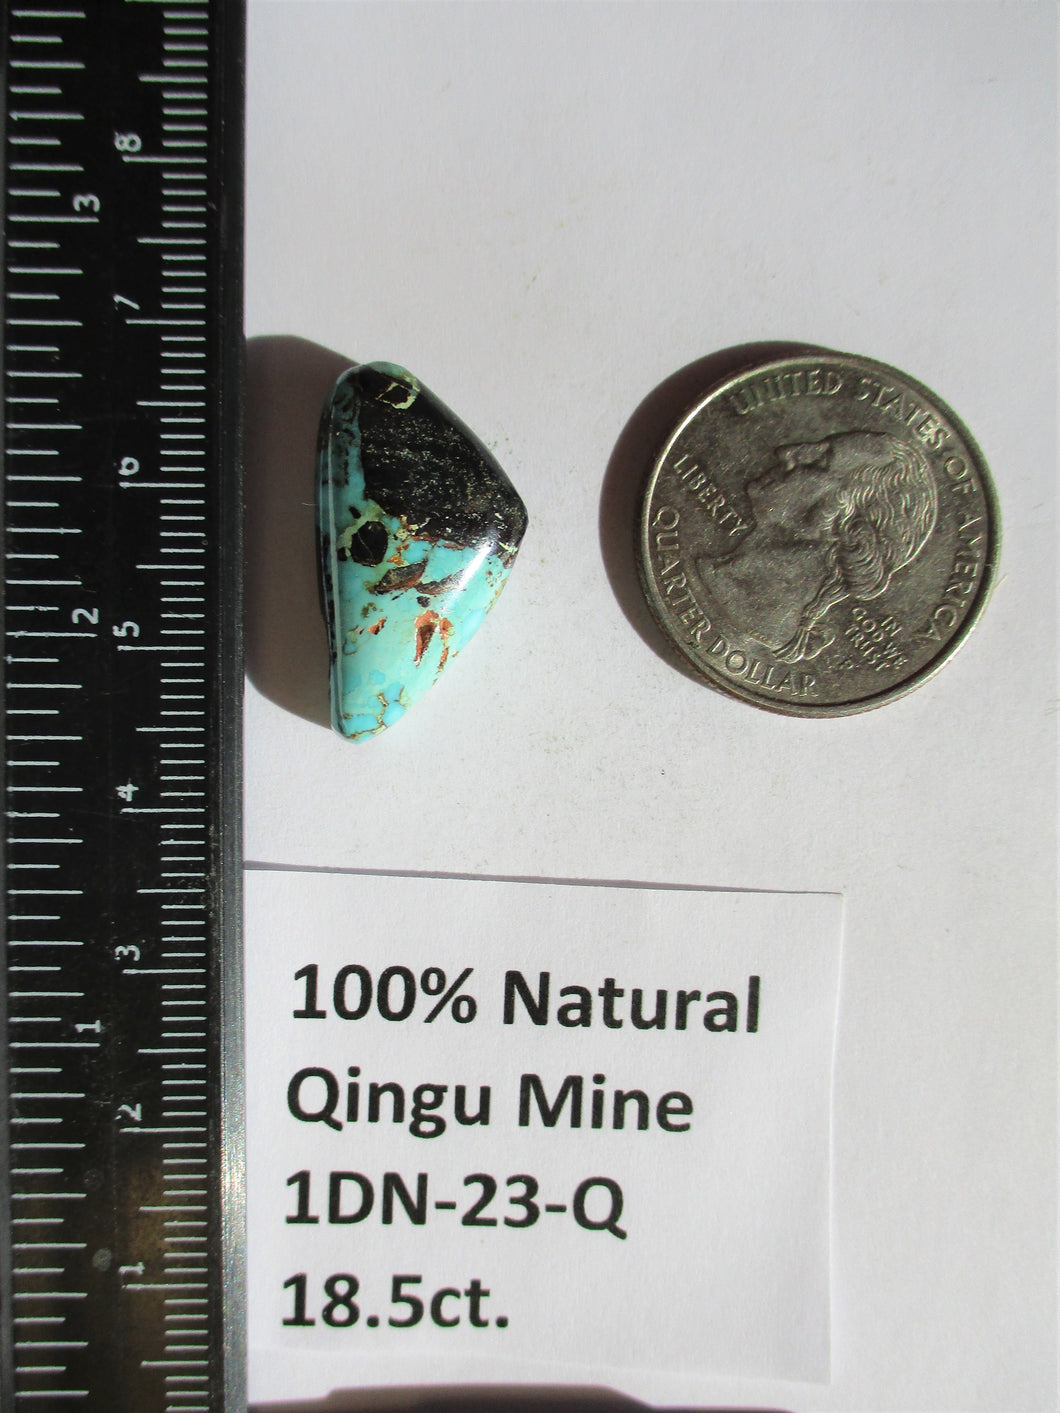 18.5ct. (24x14x8 mm) 100% Natural Qingu Mine (Hubei) Turquoise Gemstone # 1DN 23